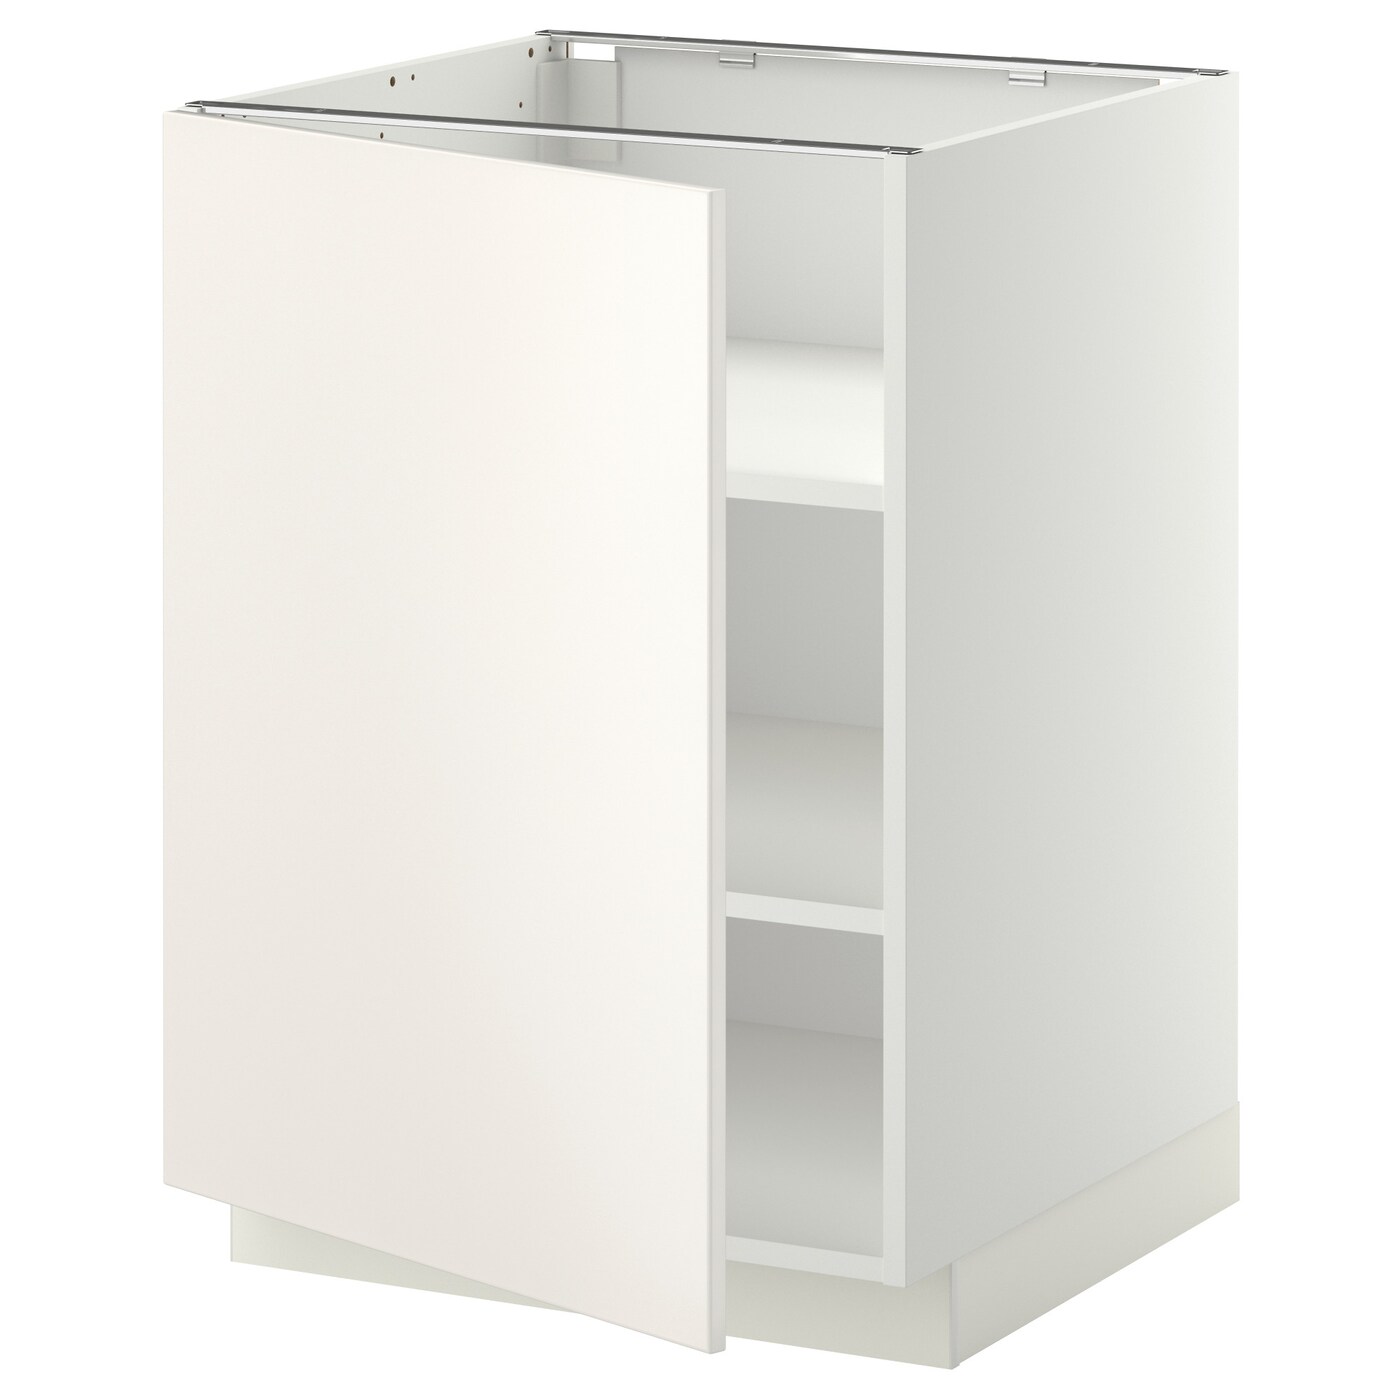 Напольный шкаф - METOD IKEA/ МЕТОД ИКЕА,  88х60 см, белый